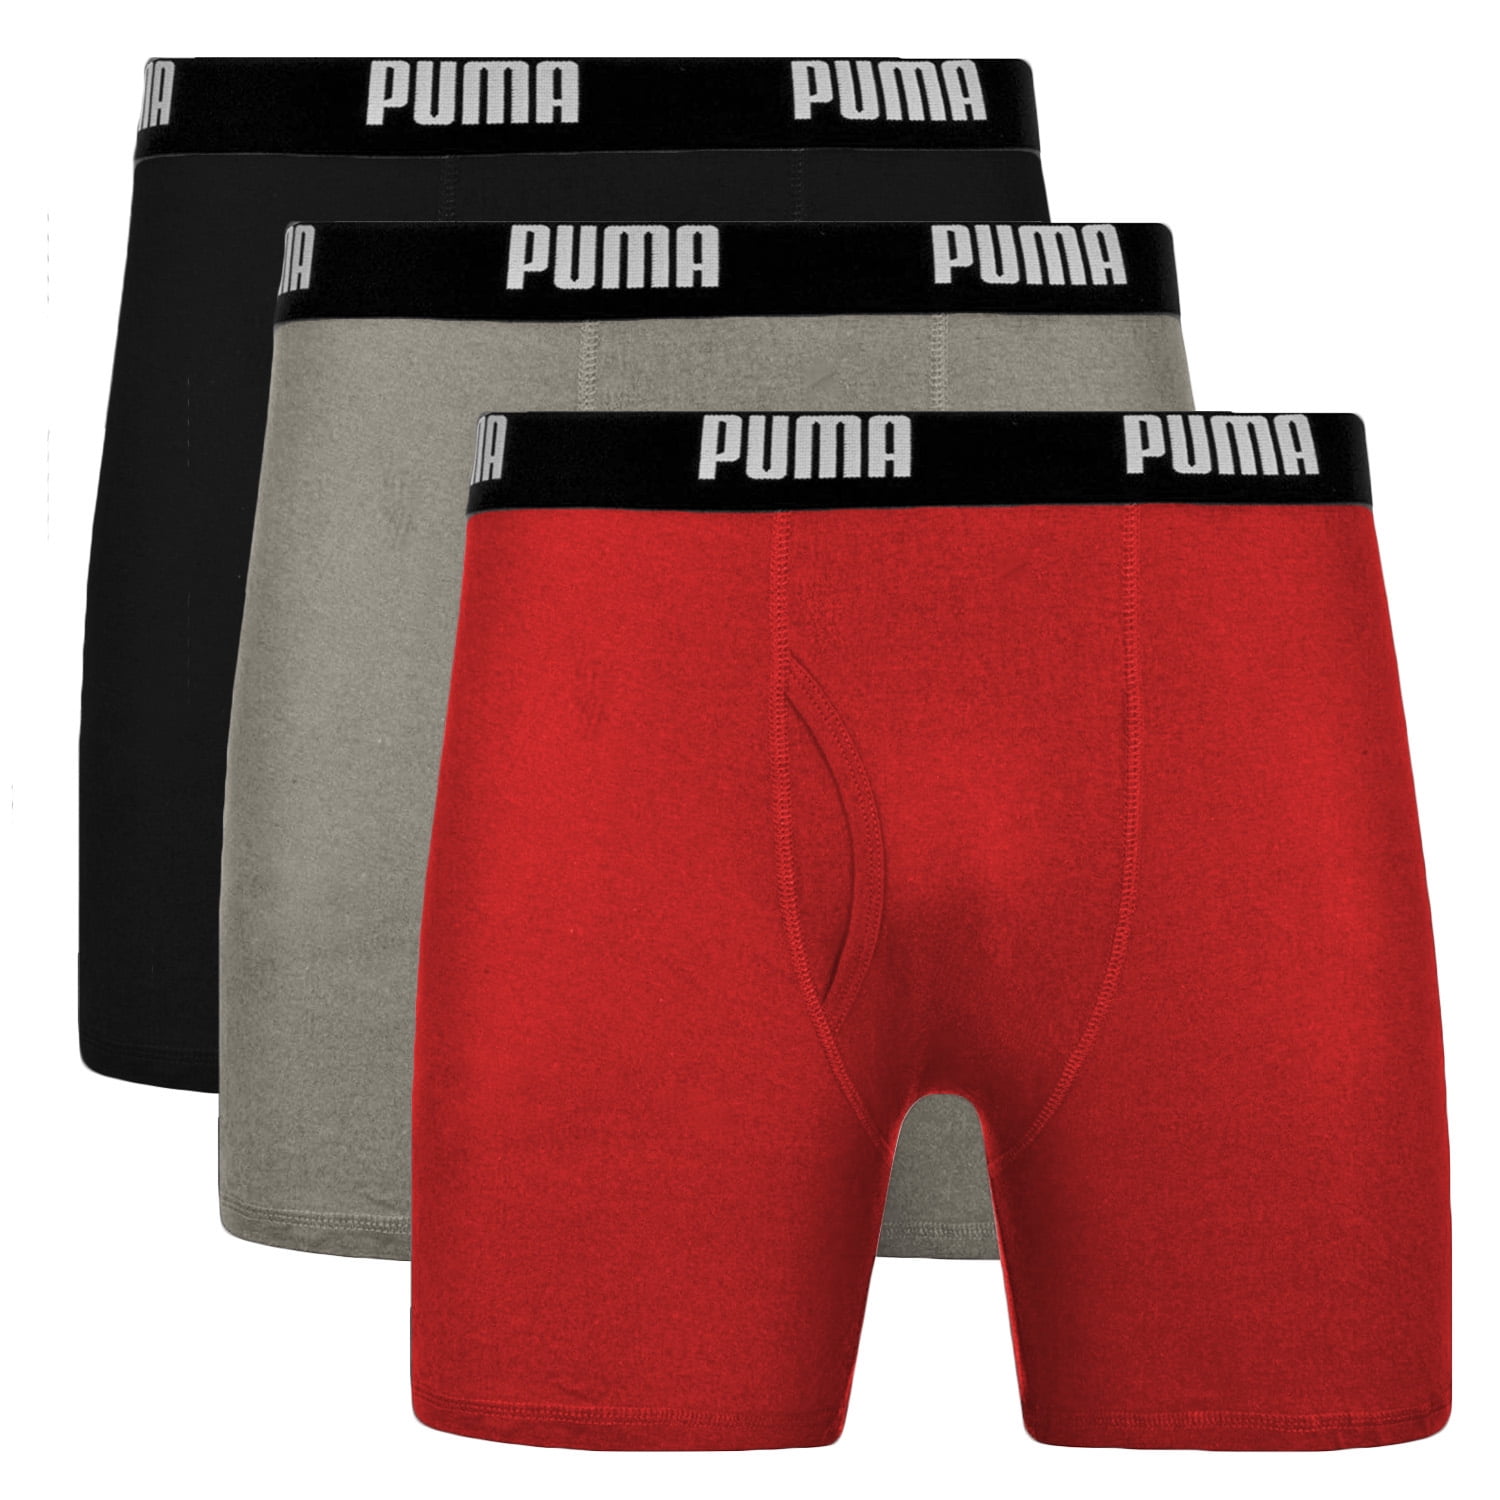 puma performance boxer briefs